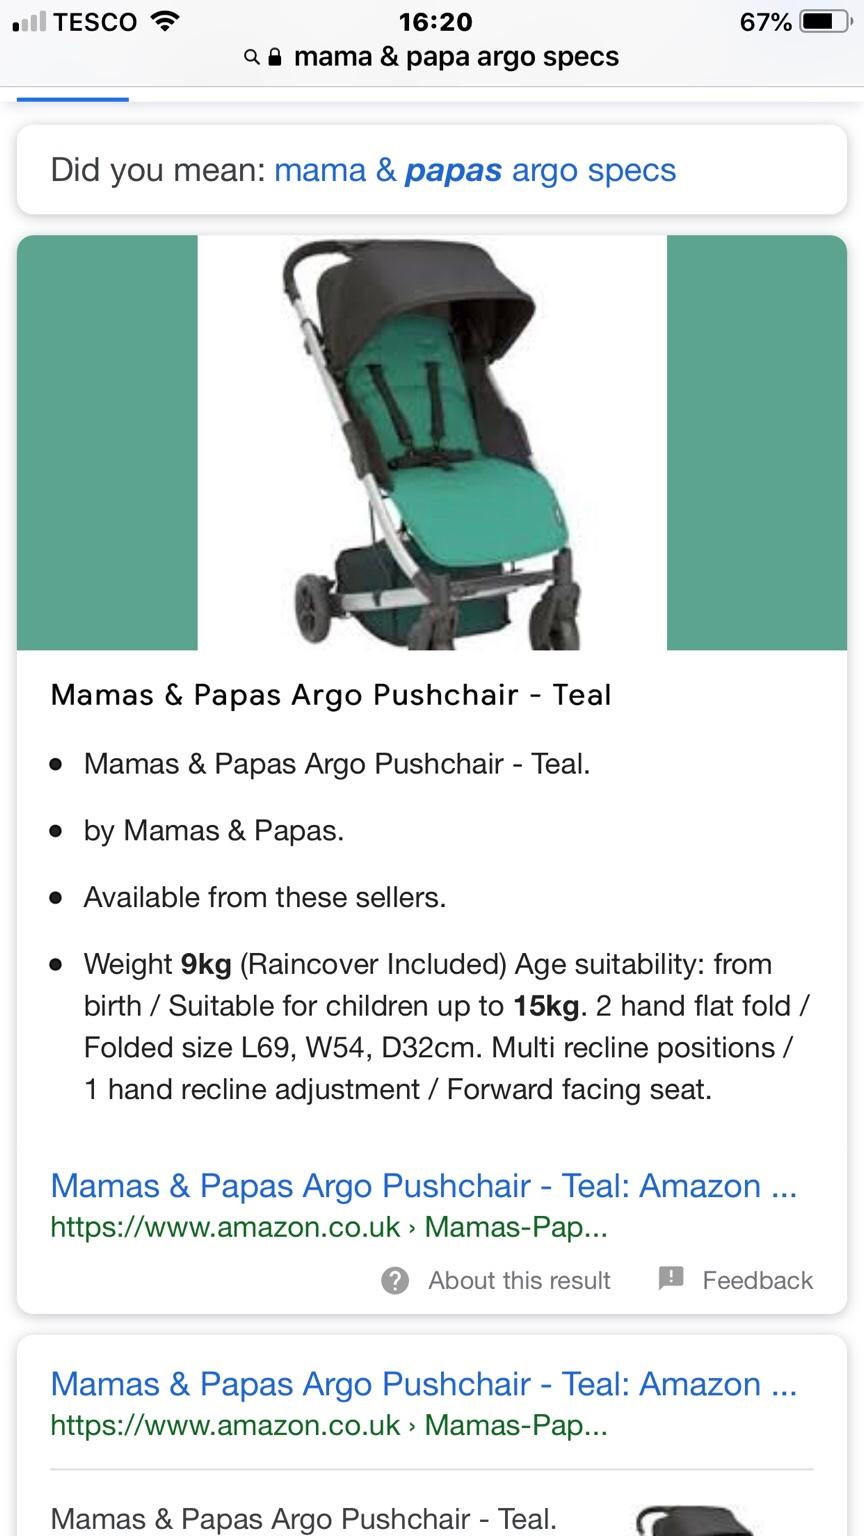 mamas and papas argo pushchair